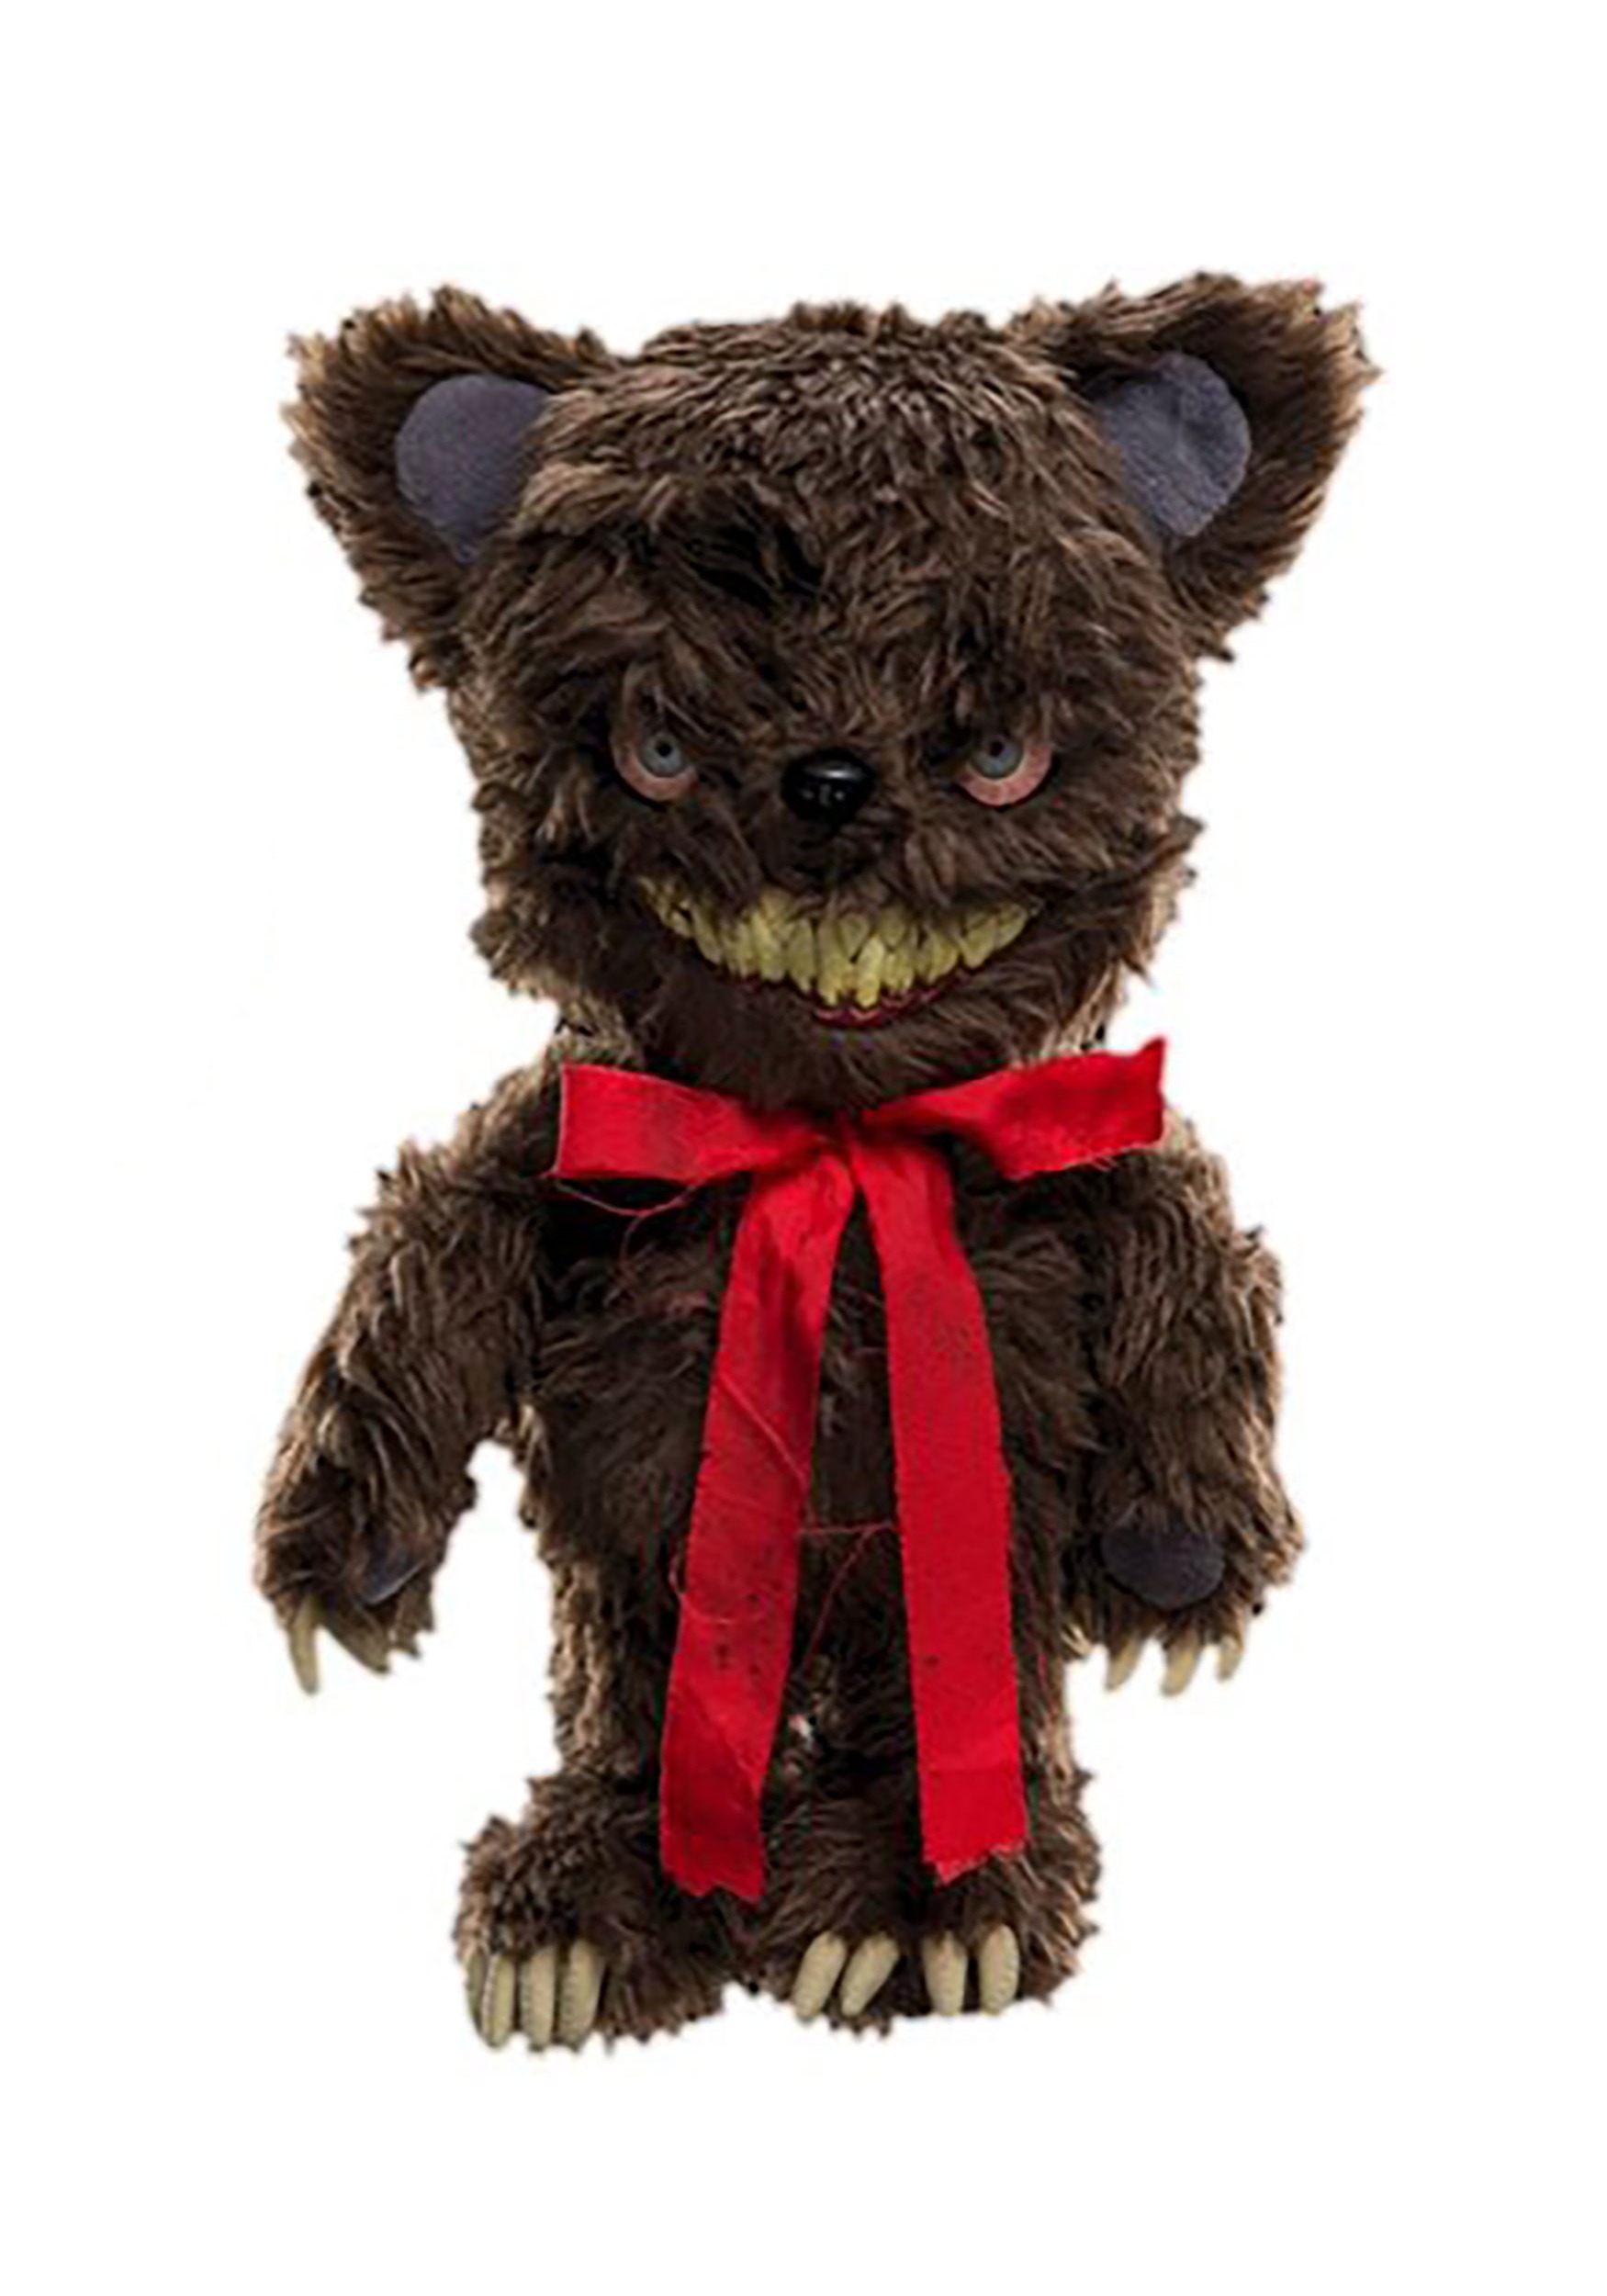 Krampus Klaue Movie Stuffed Teddy Bear